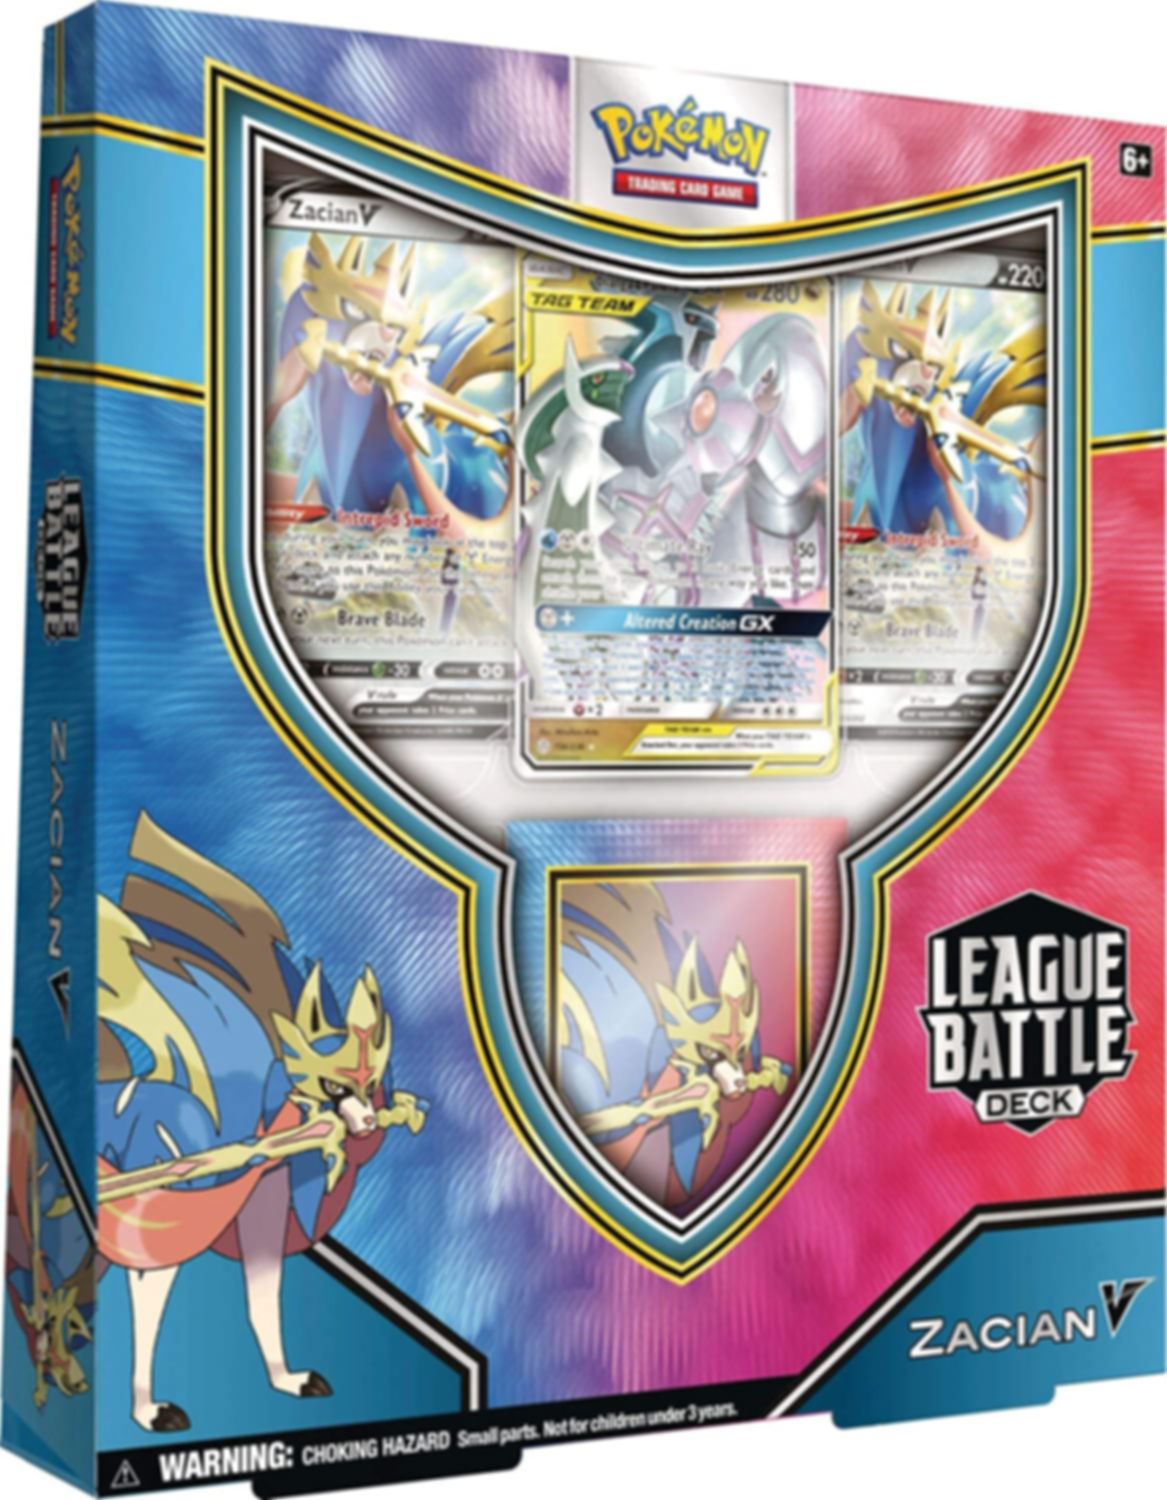 Pokémon TCG: Zacian V League Battle Deck box